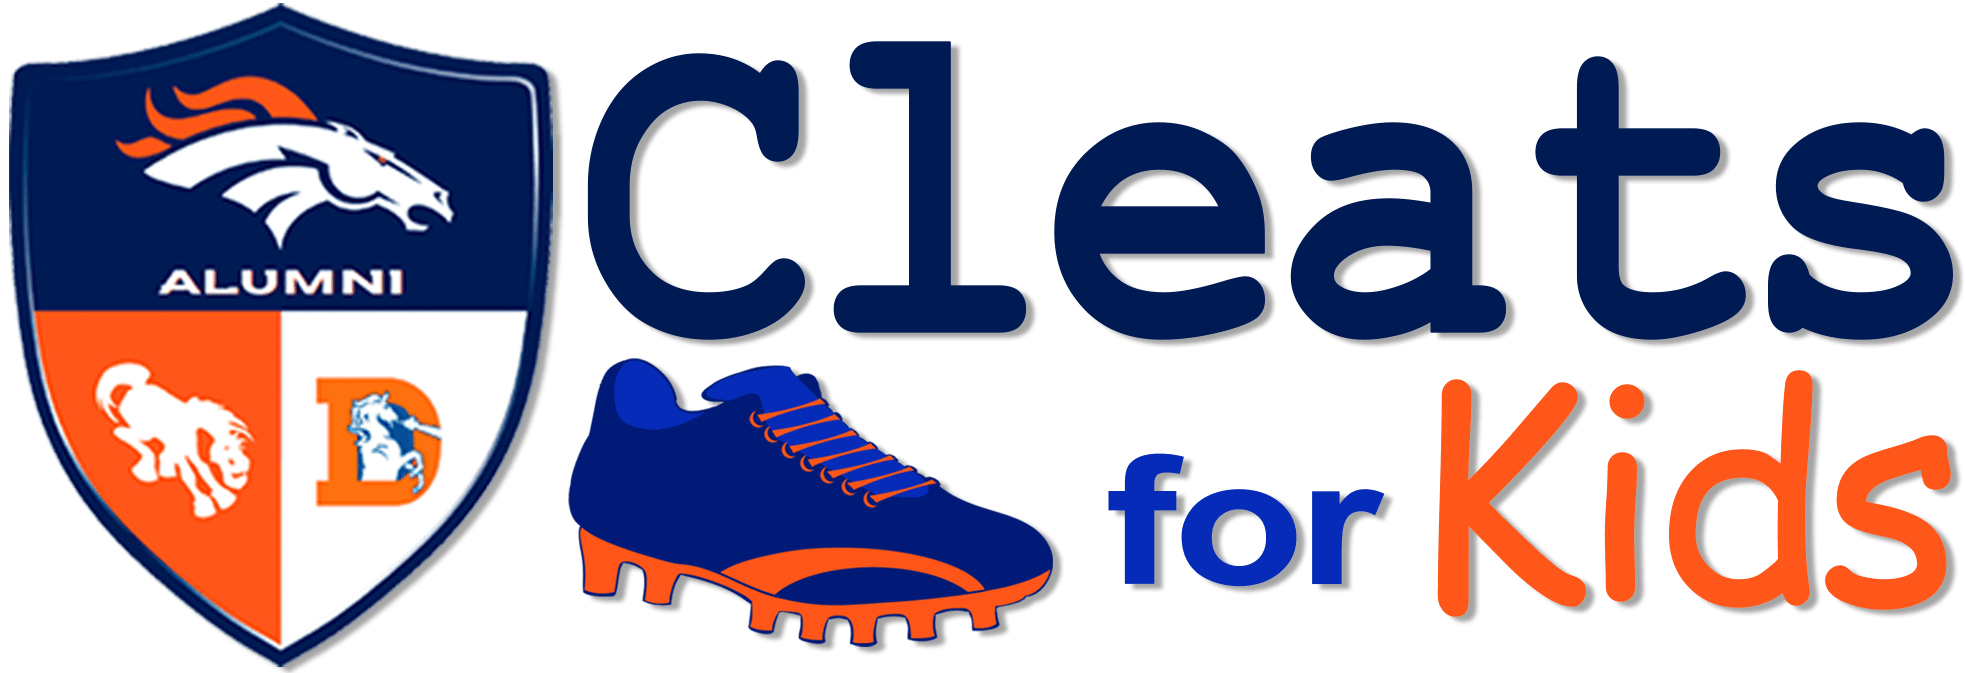 Cleats Logo - Denver Broncos Alumni Association Official Website